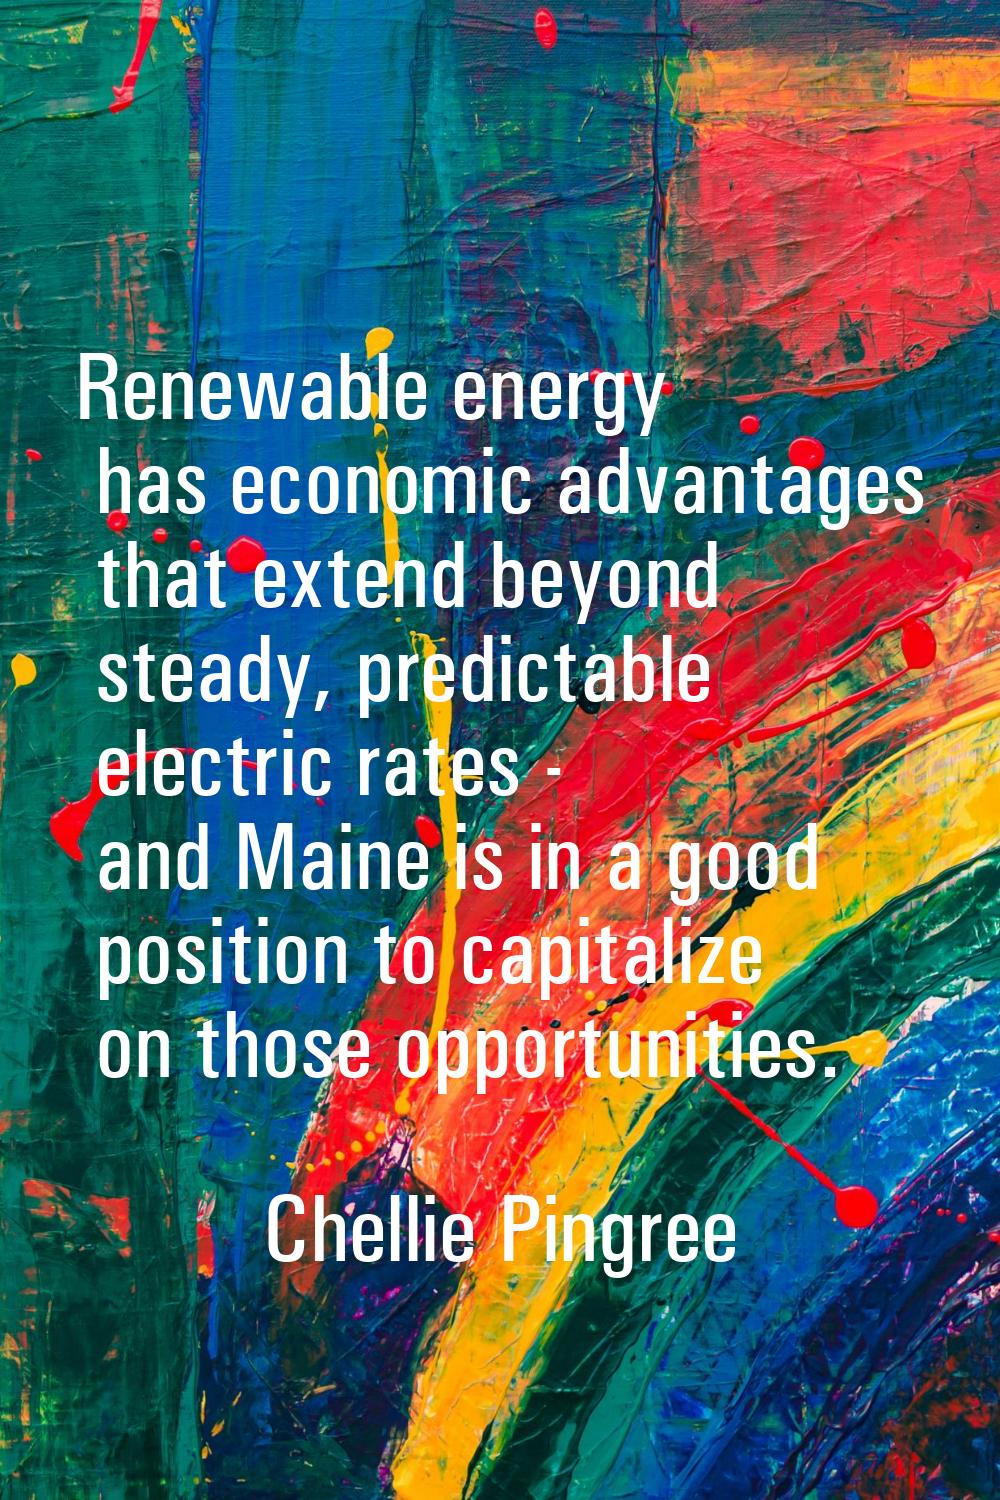 Renewable energy has economic advantages that extend beyond steady, predictable electric rates - an